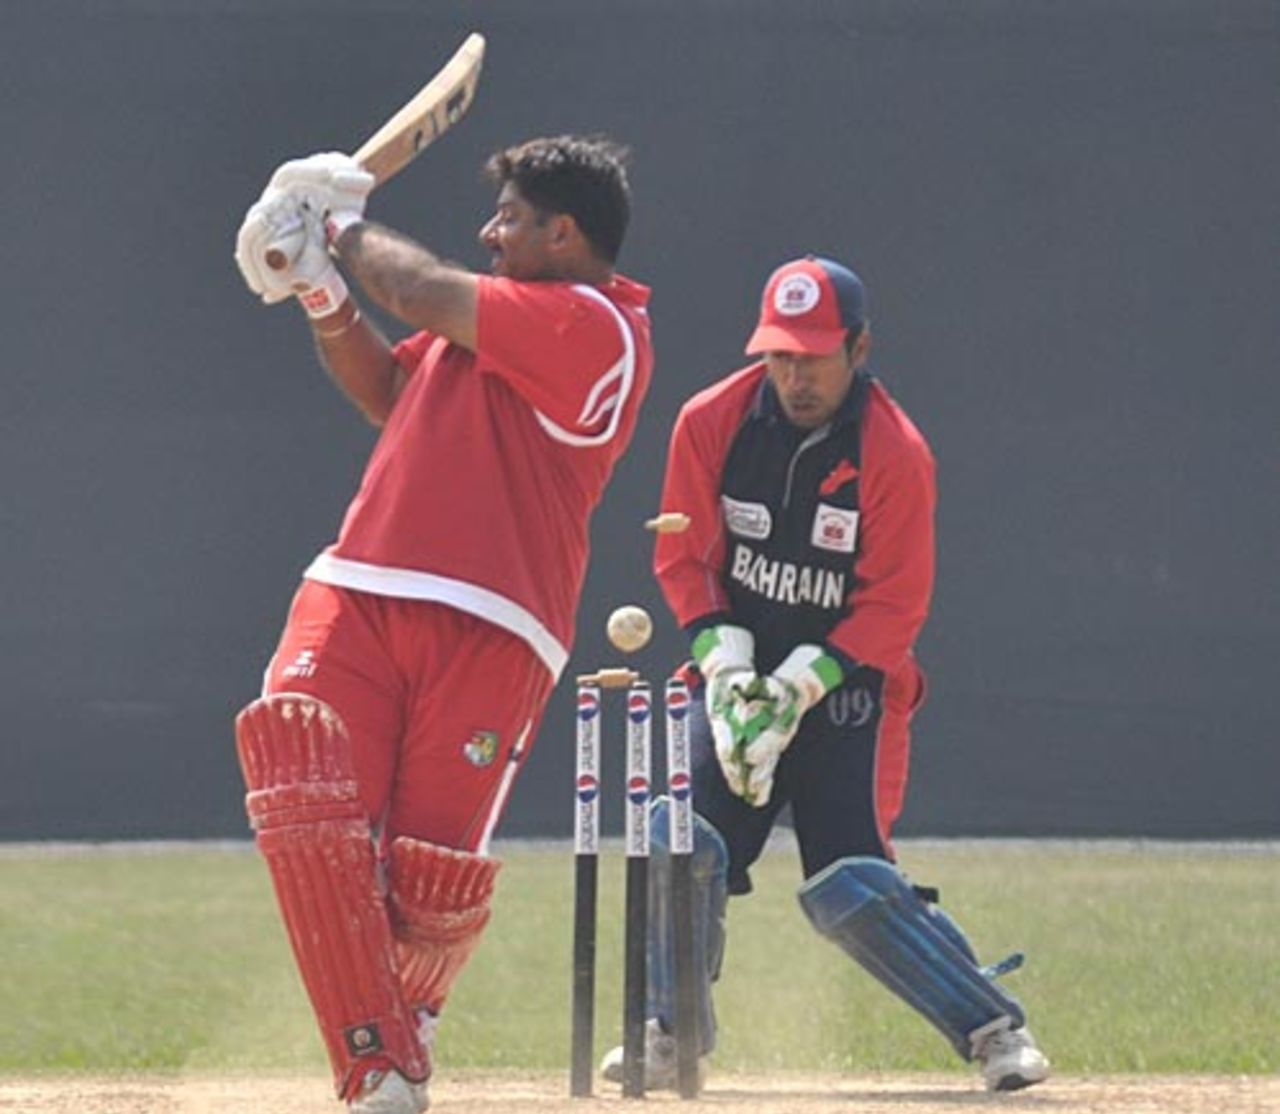 Munish Arora is bowled, Singapore v Bahrain, ICC World Cricket League Division 5, February 27, 2010